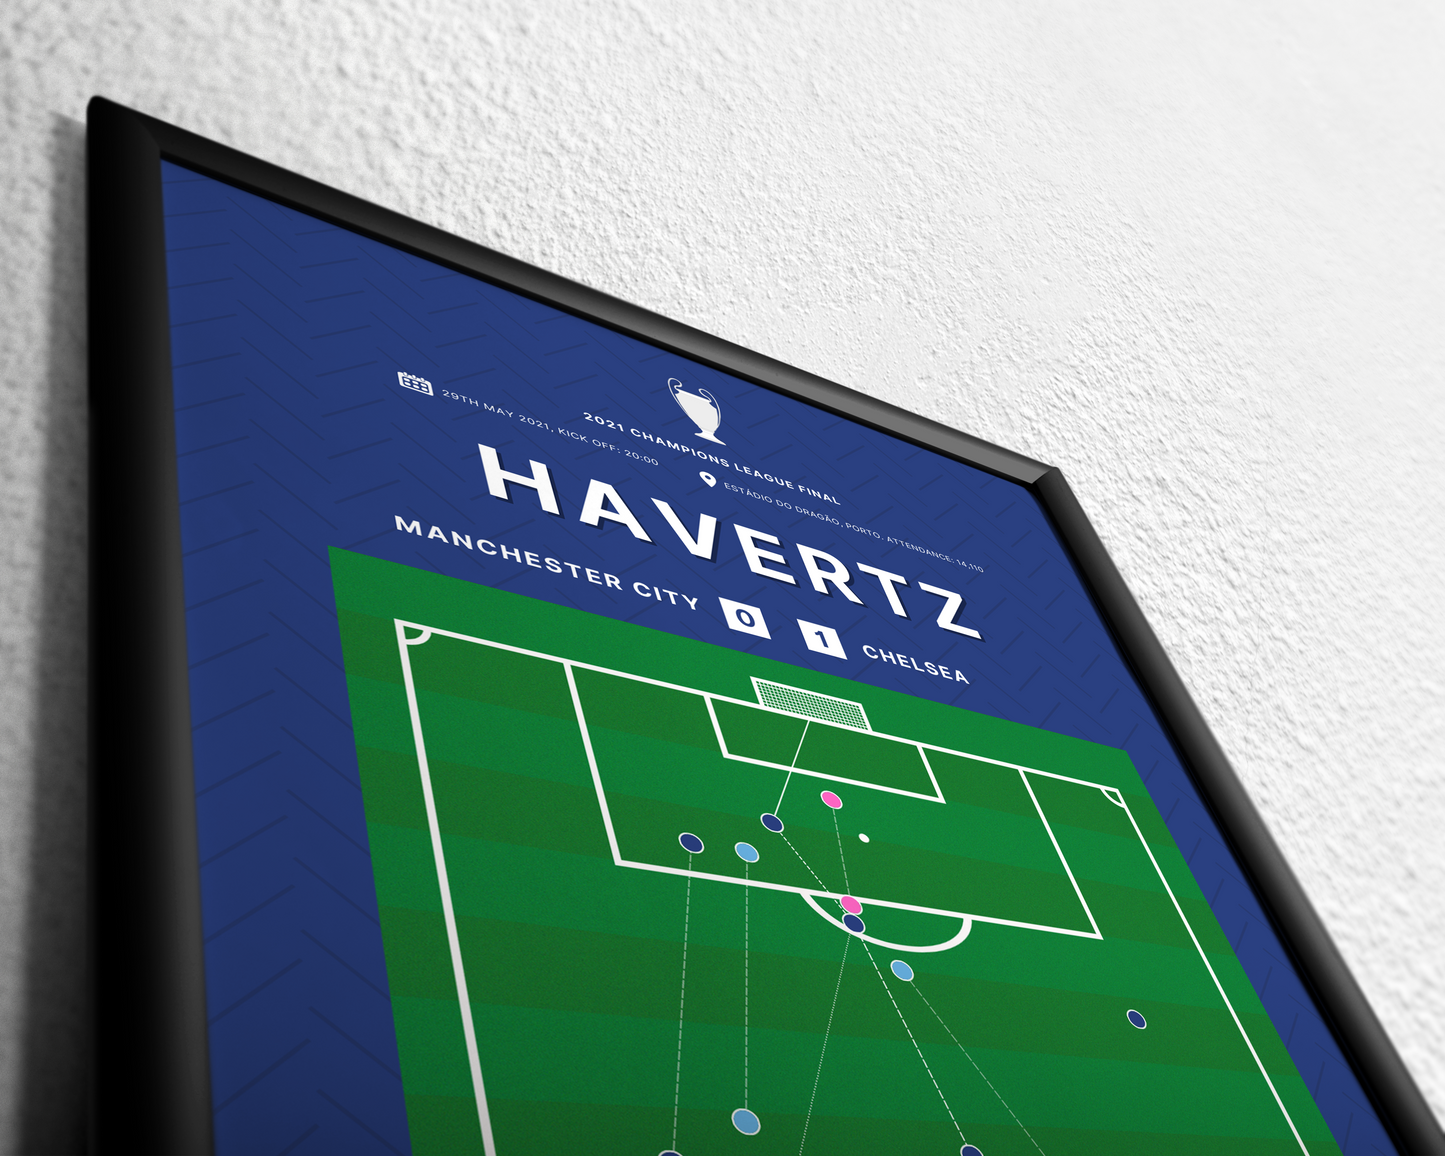 Havertz' goal vs. Manchester City to win the Champions League